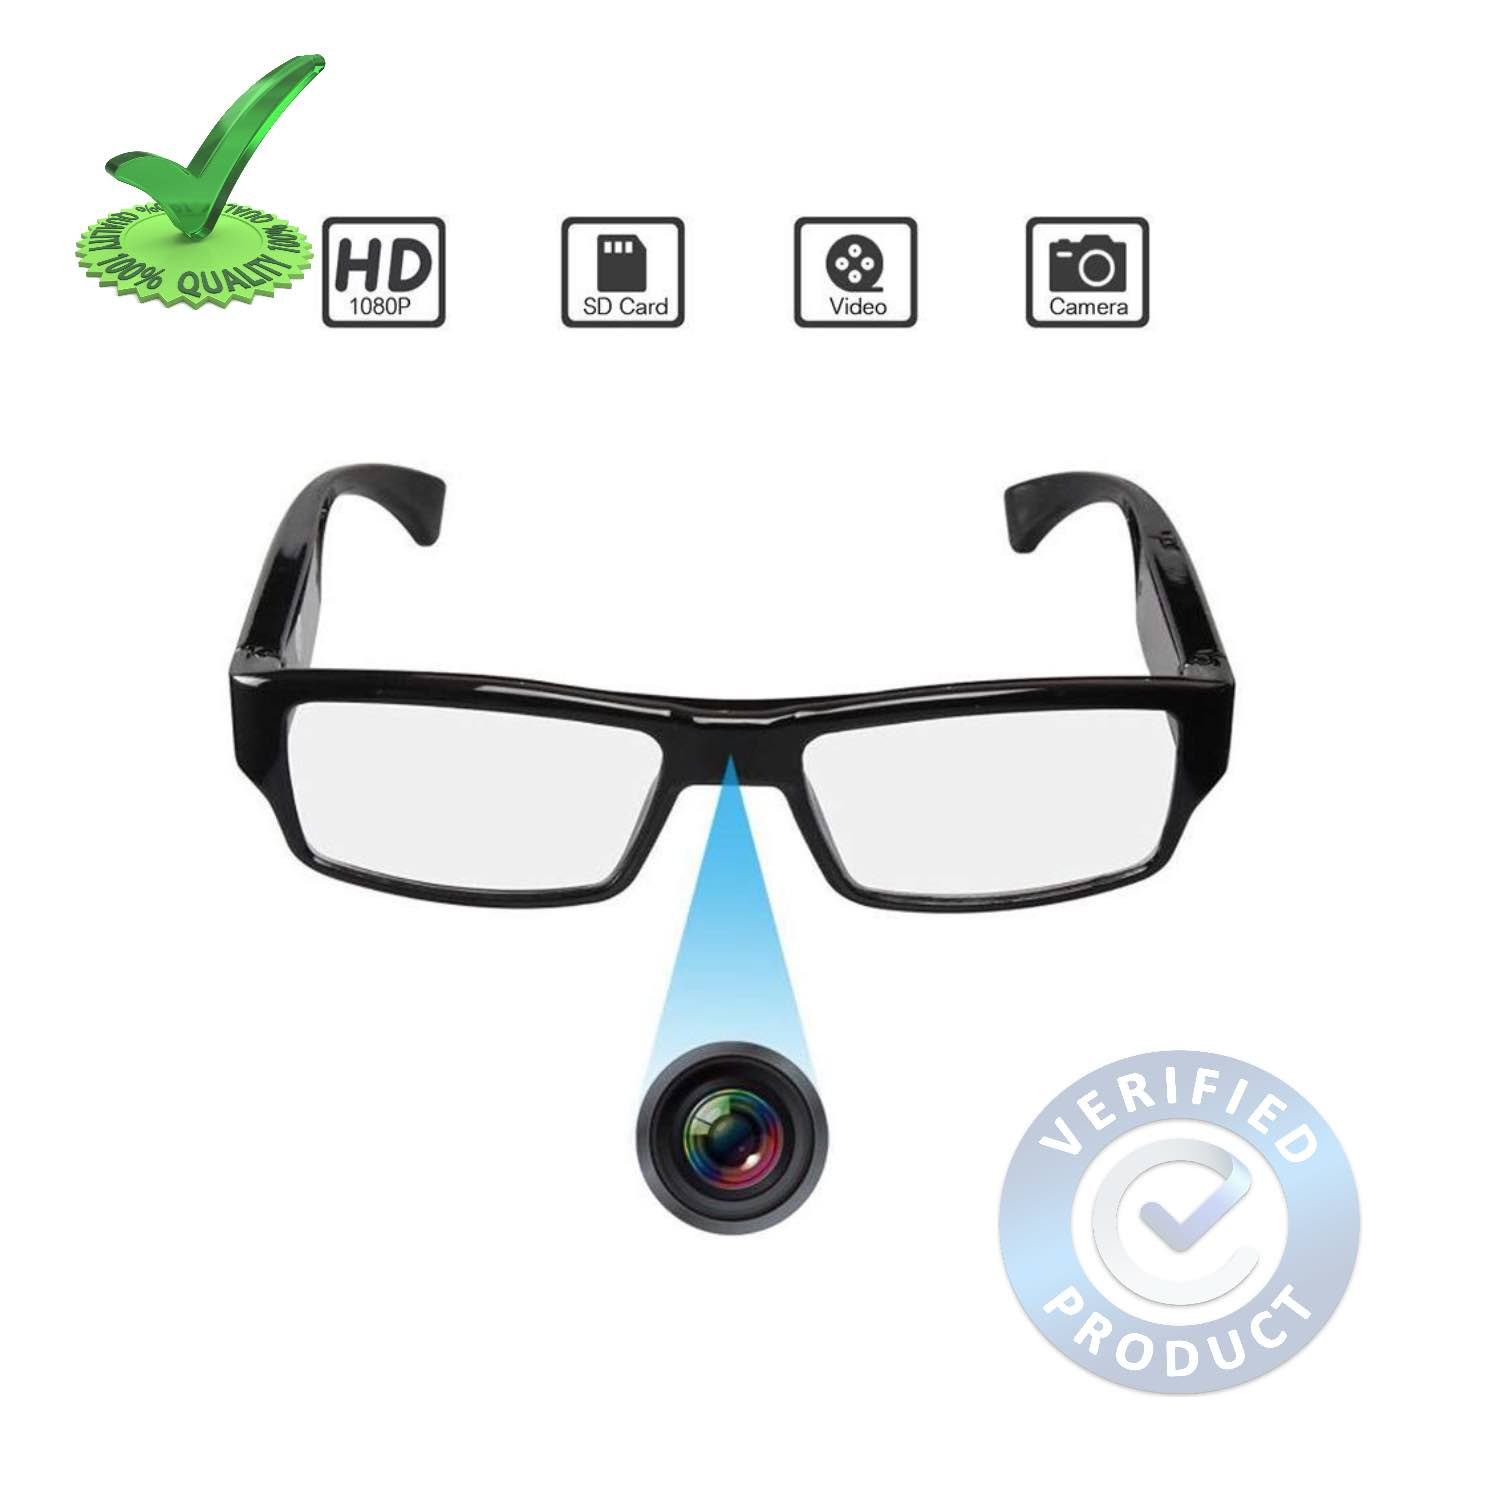 1080p FHD Ultra Slim Invisible Lens Goggles Hidden Spy Camera